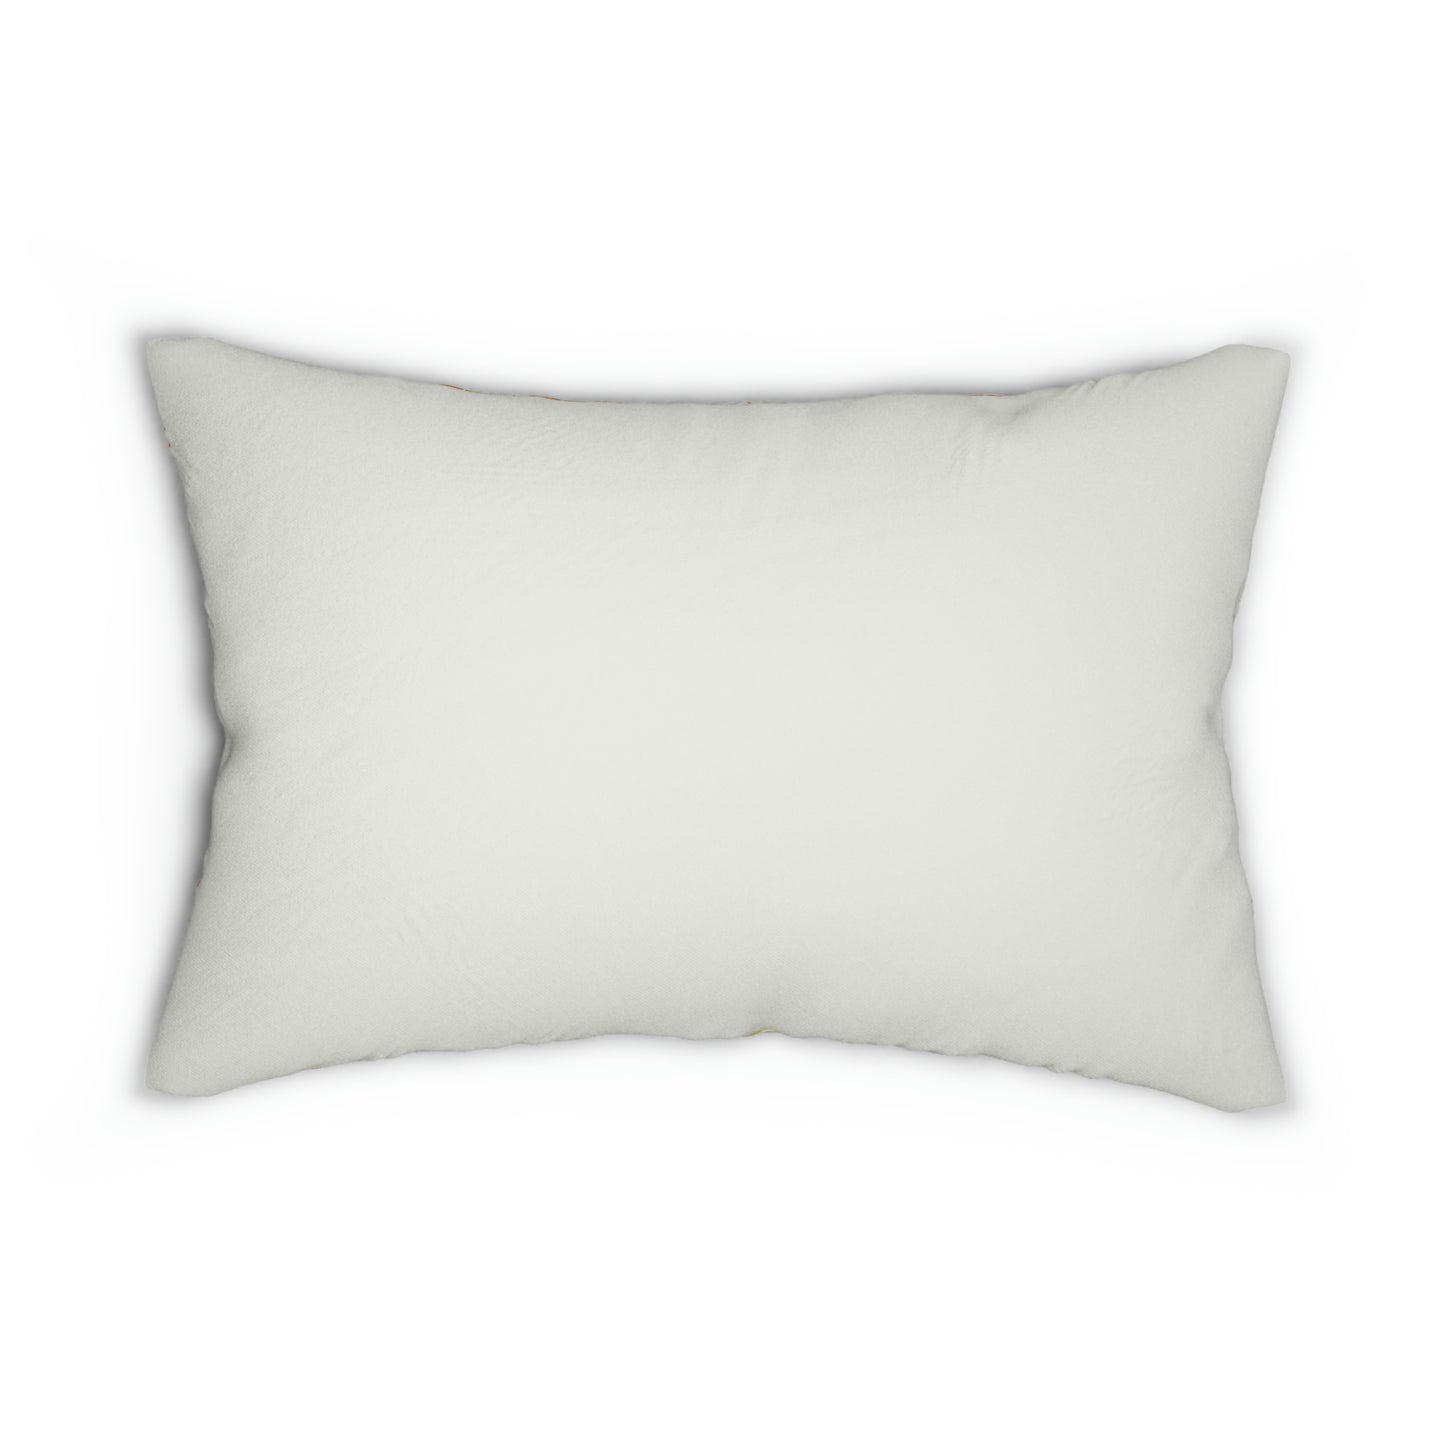 William-Morris-&-Co-Spun-Poly-Lumbar-Cushion-and-Cushion-Cover-Golden-Bough-Collection-2